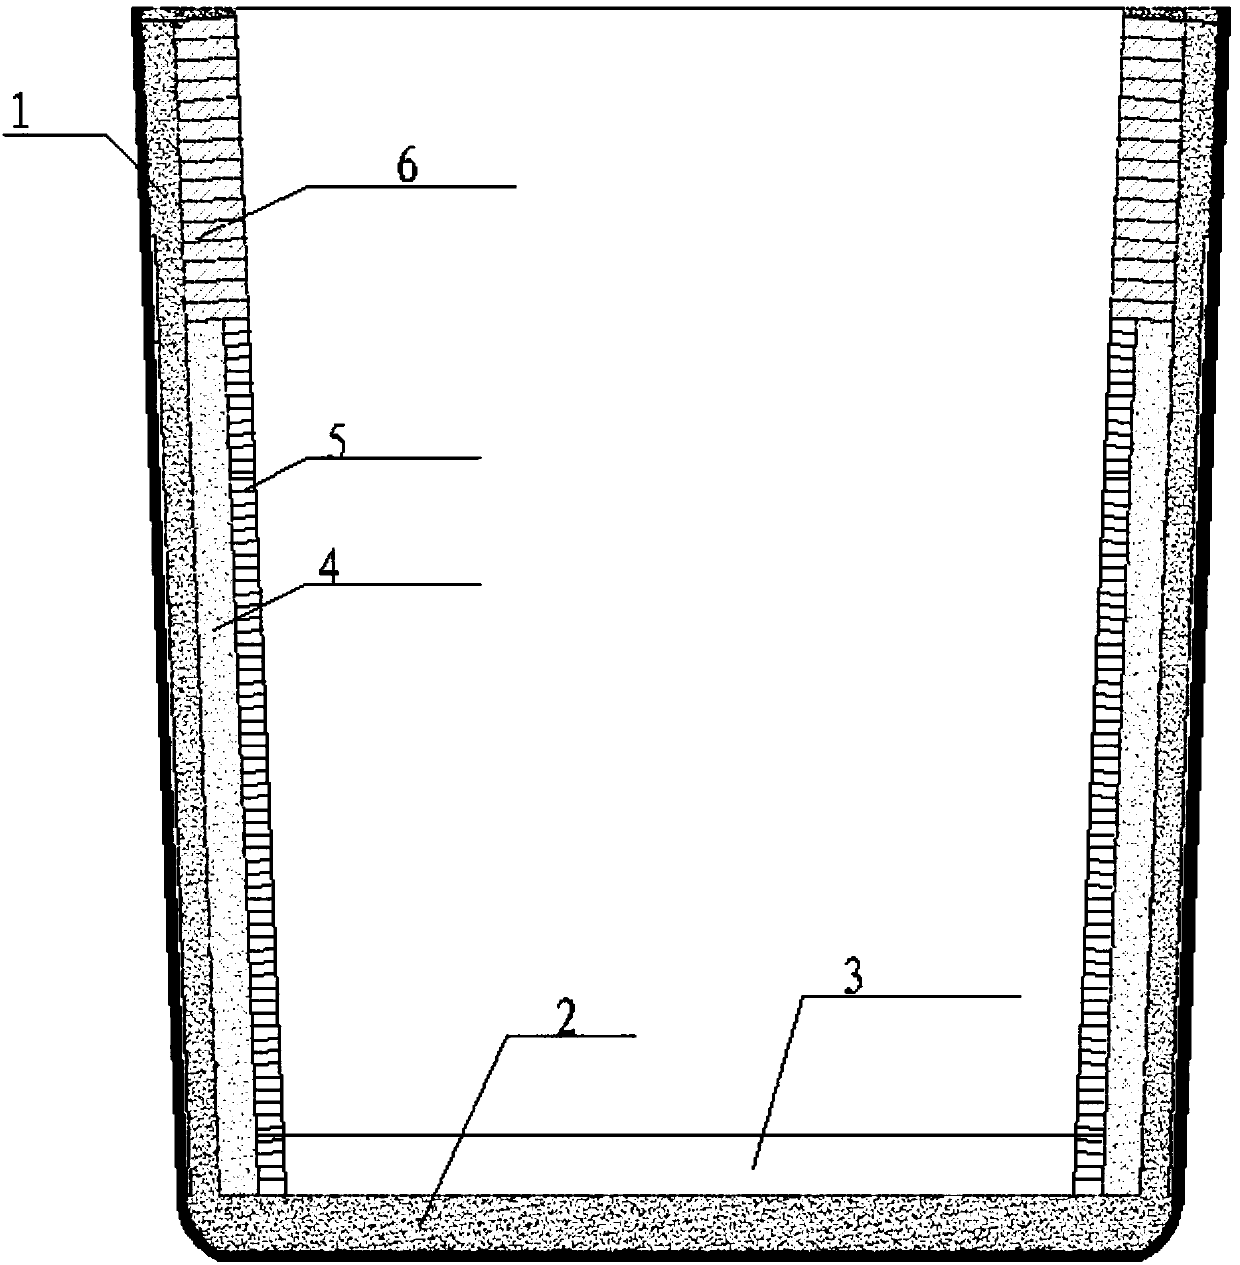 A construction method of composite ladle permanent layer